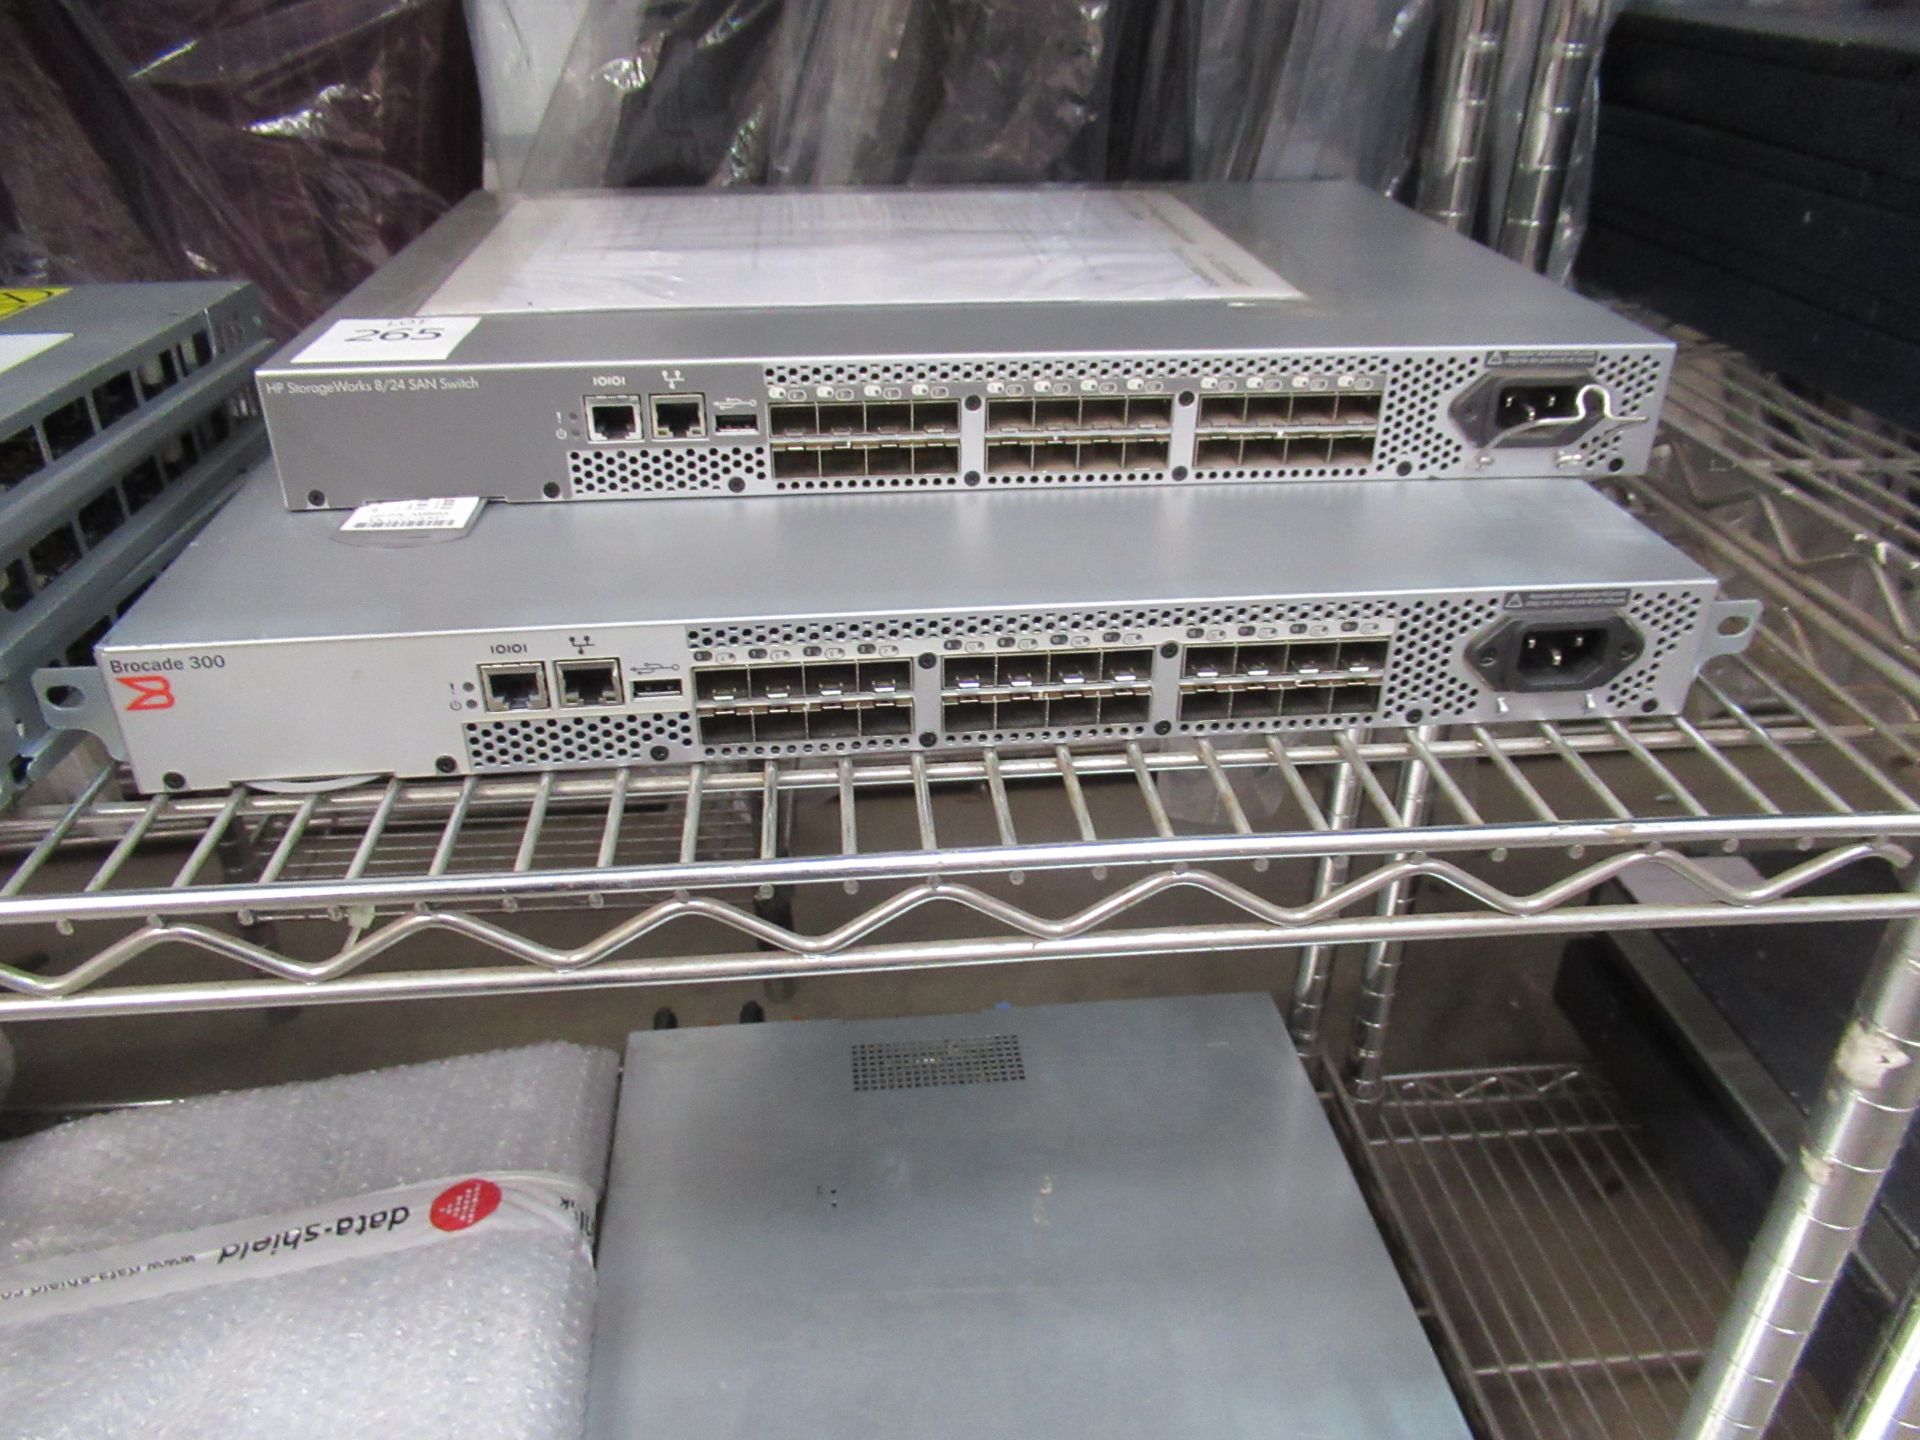 2 x McData 4300 switch, 2 x QLogic SANbox 3800 switch, Qlogic 3800, 1 x Brocade 200e switch, 200e - Image 29 of 40